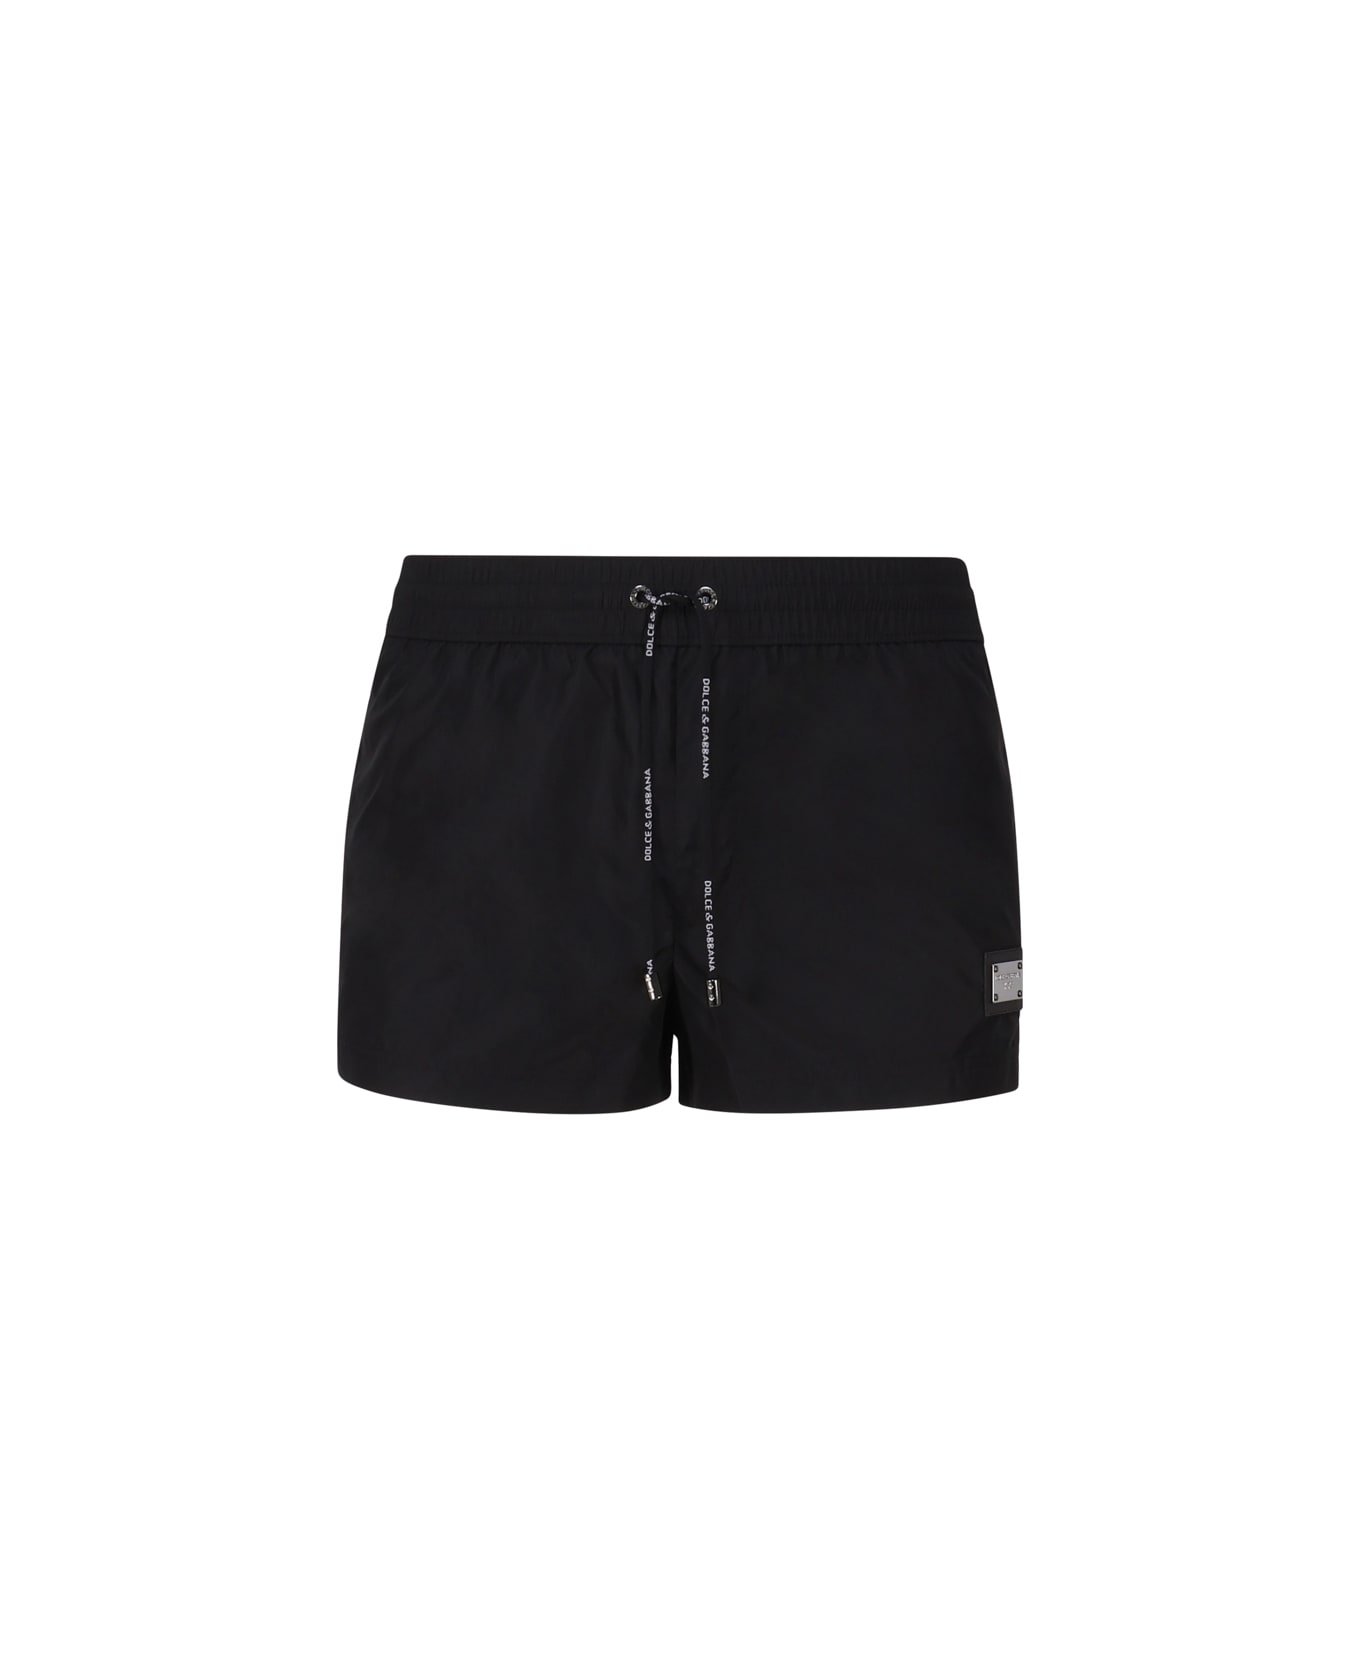 Dolce & Gabbana Short Beach Boxer Shorts Made Of Lightweight Nylon With Metal Logo Plaque - Black